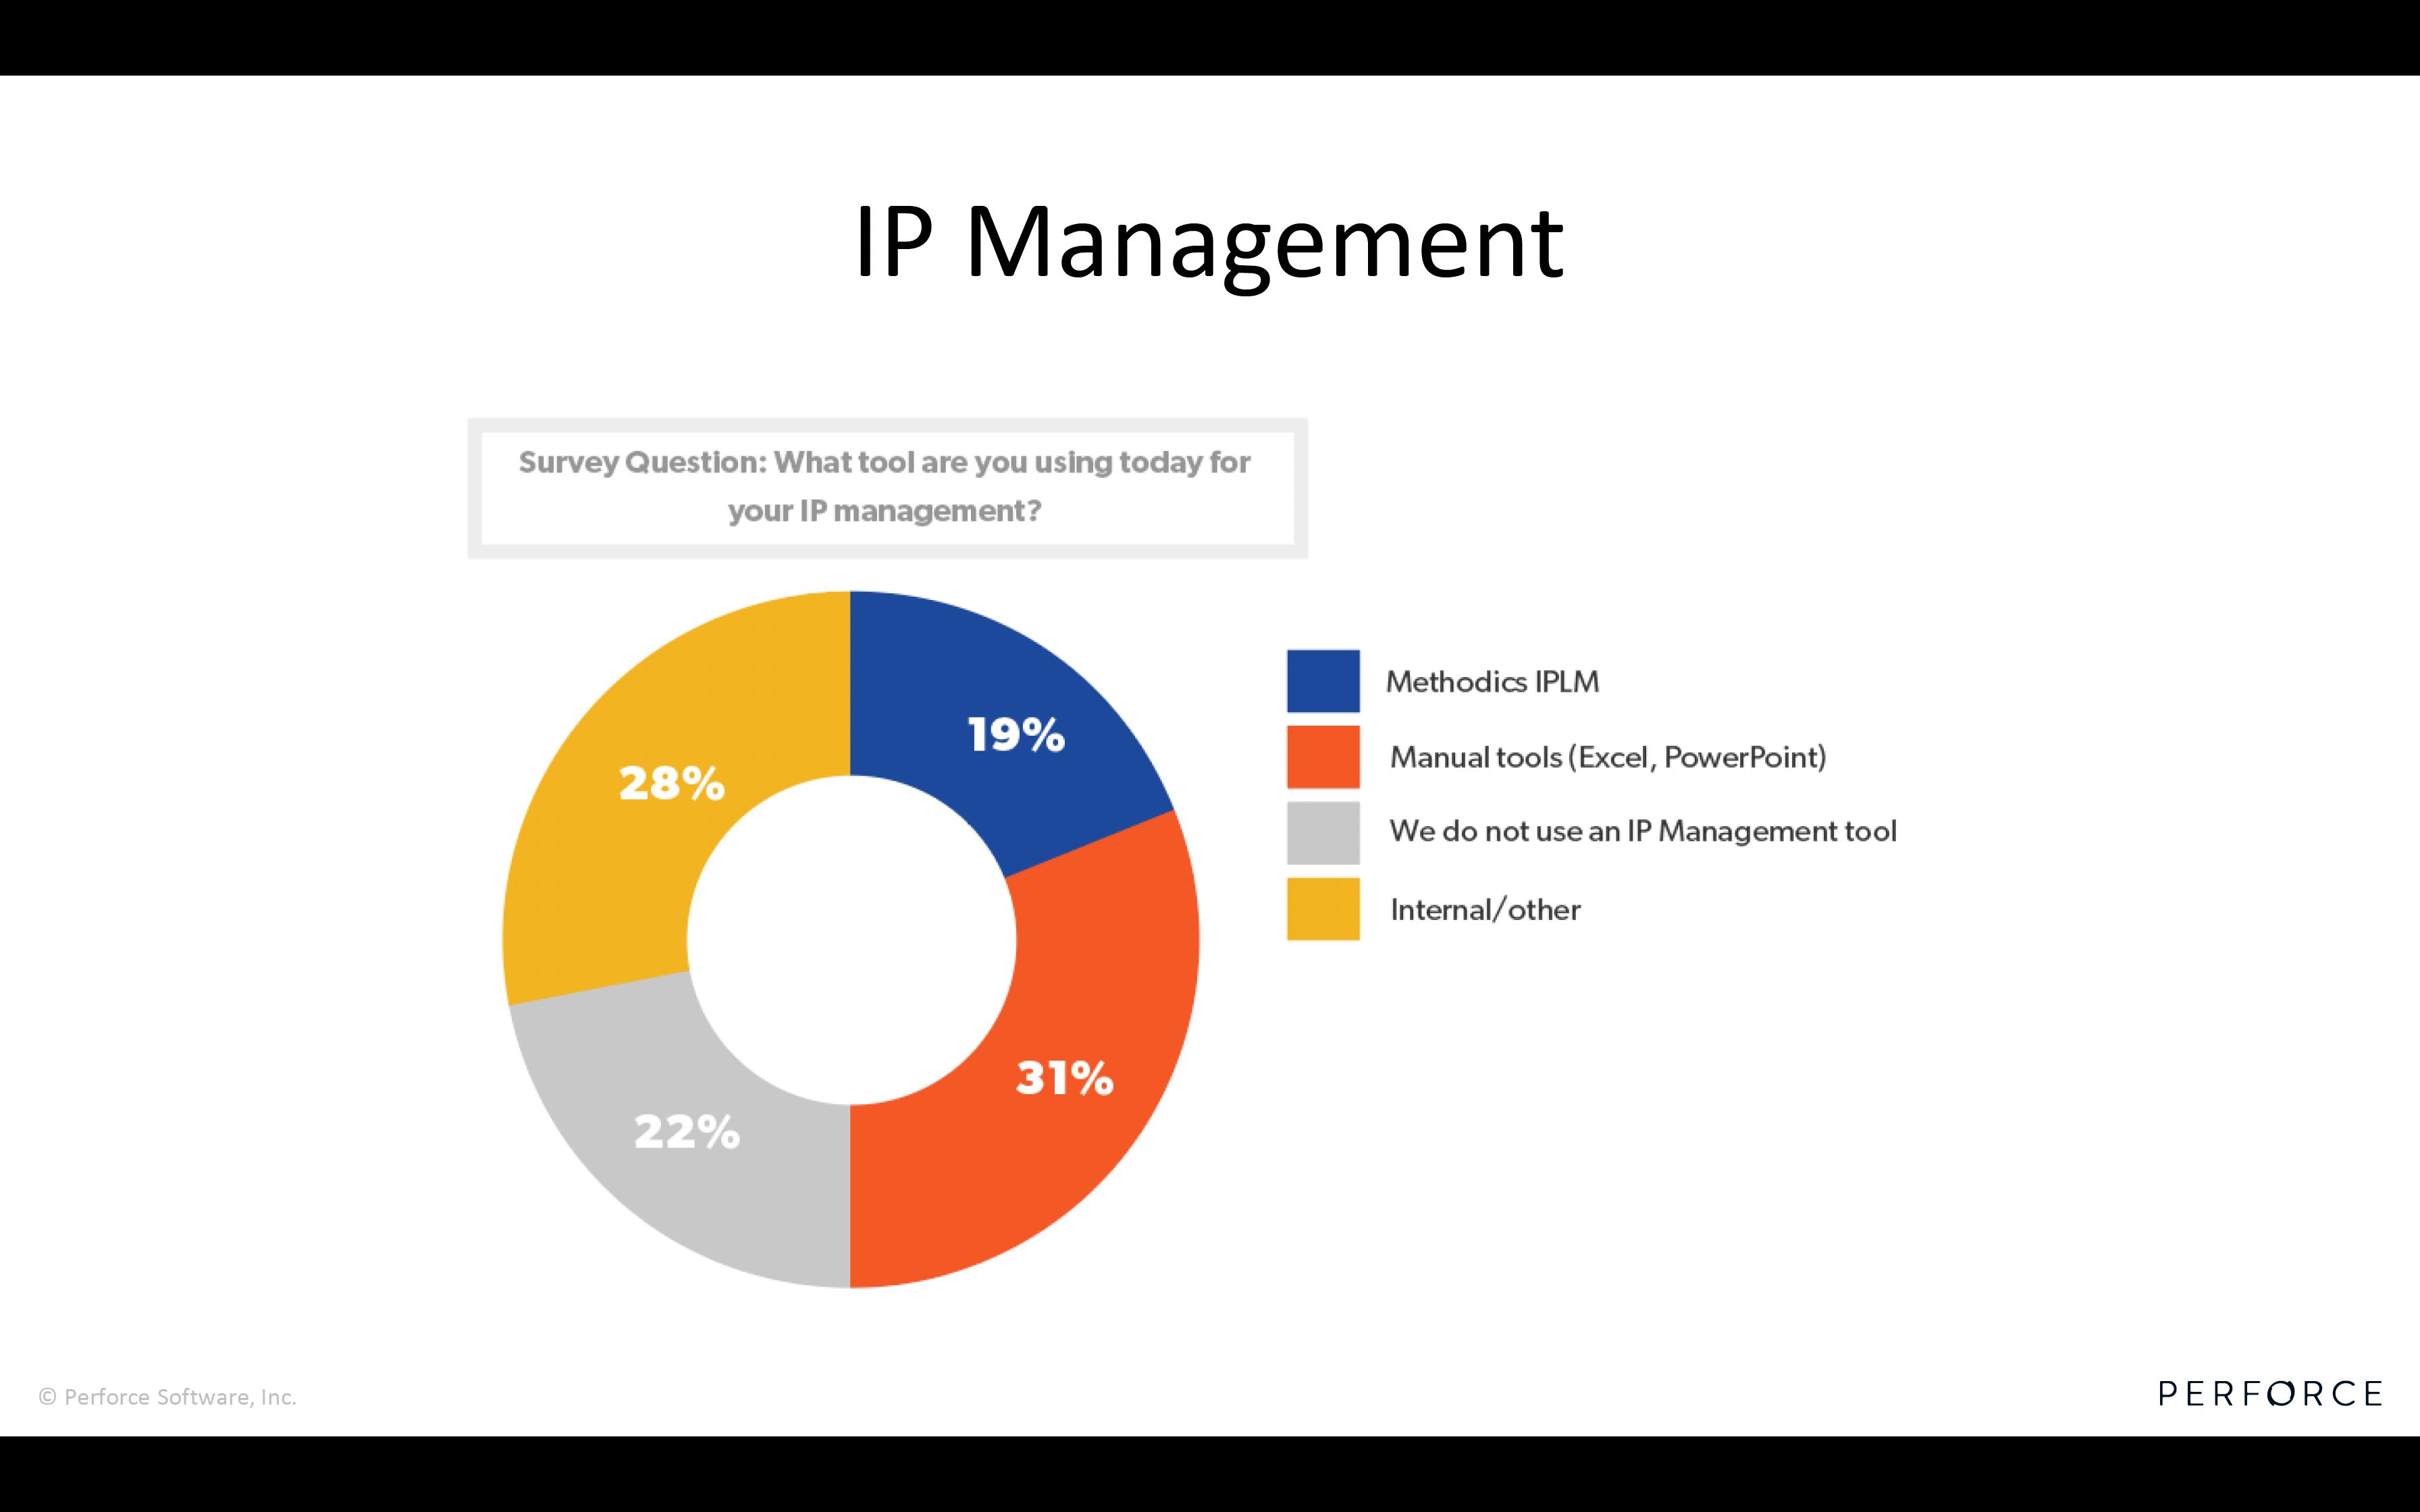 IP Management Tools Survey semiconductor